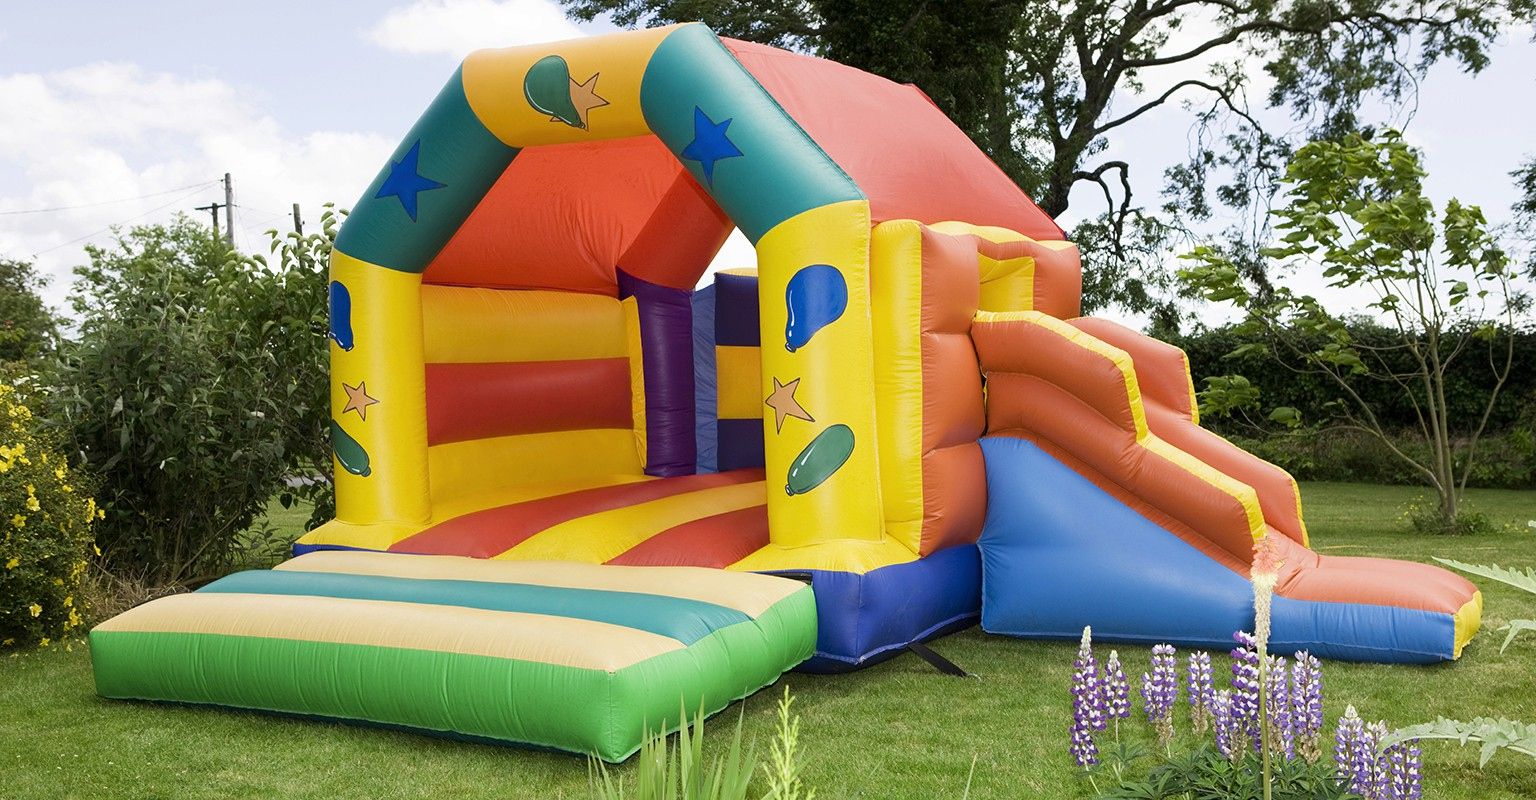 bouncy house rentals